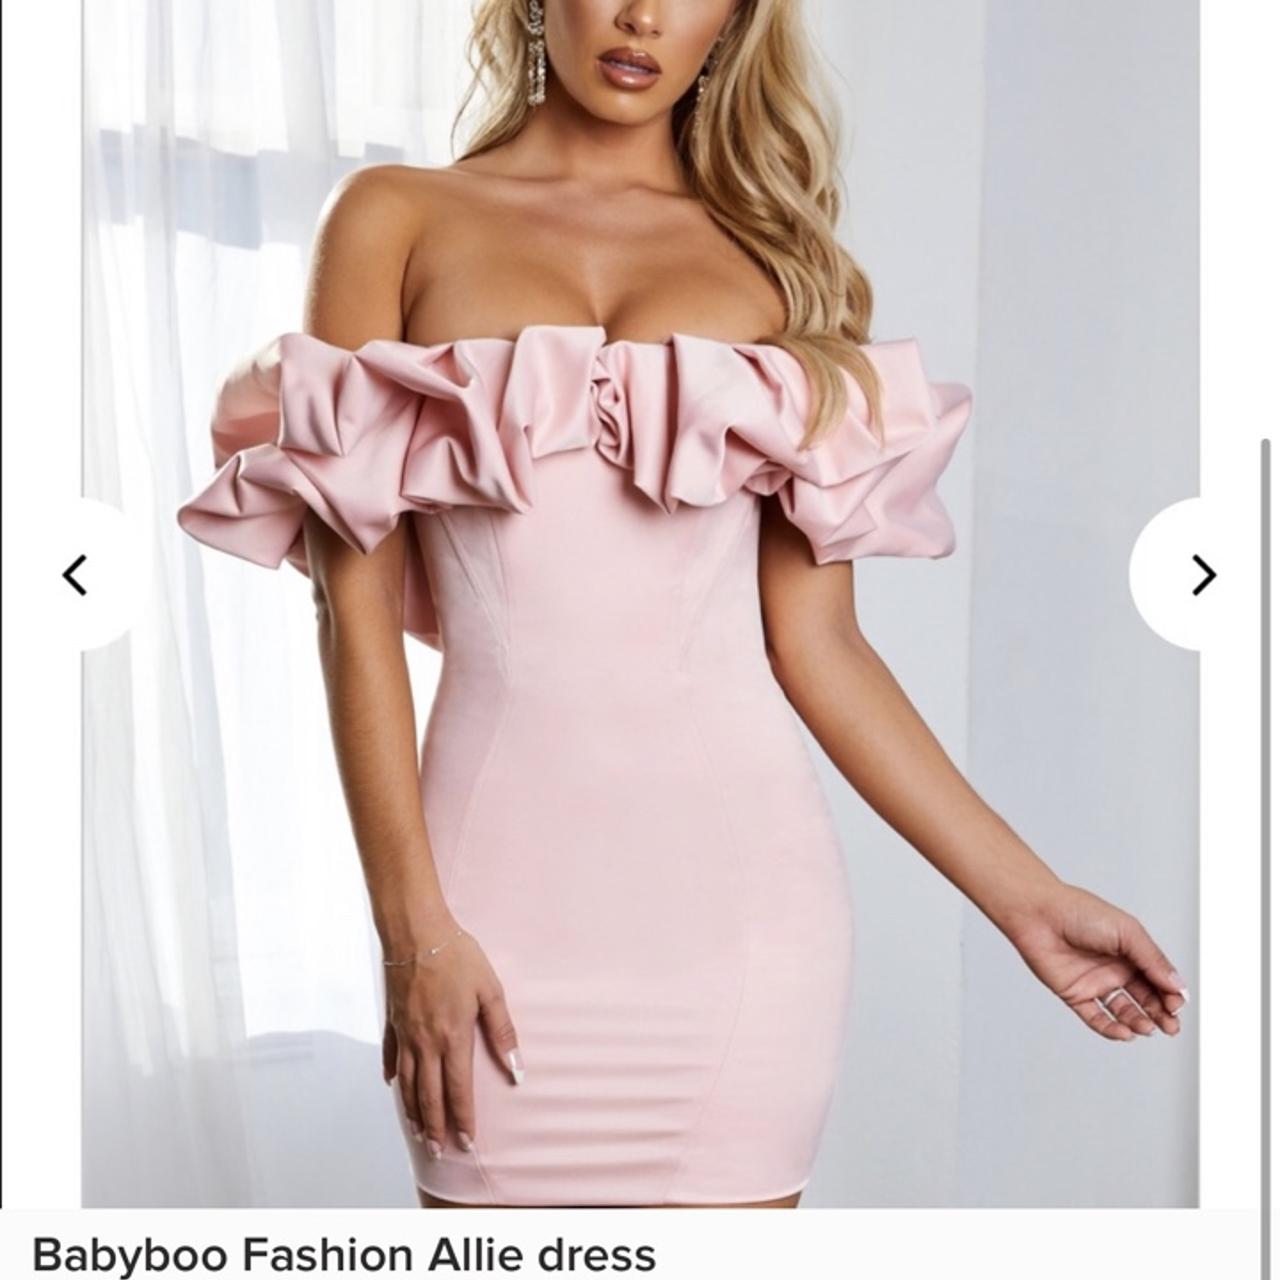 Babyboo fashion Allie dress In light pink - Depop